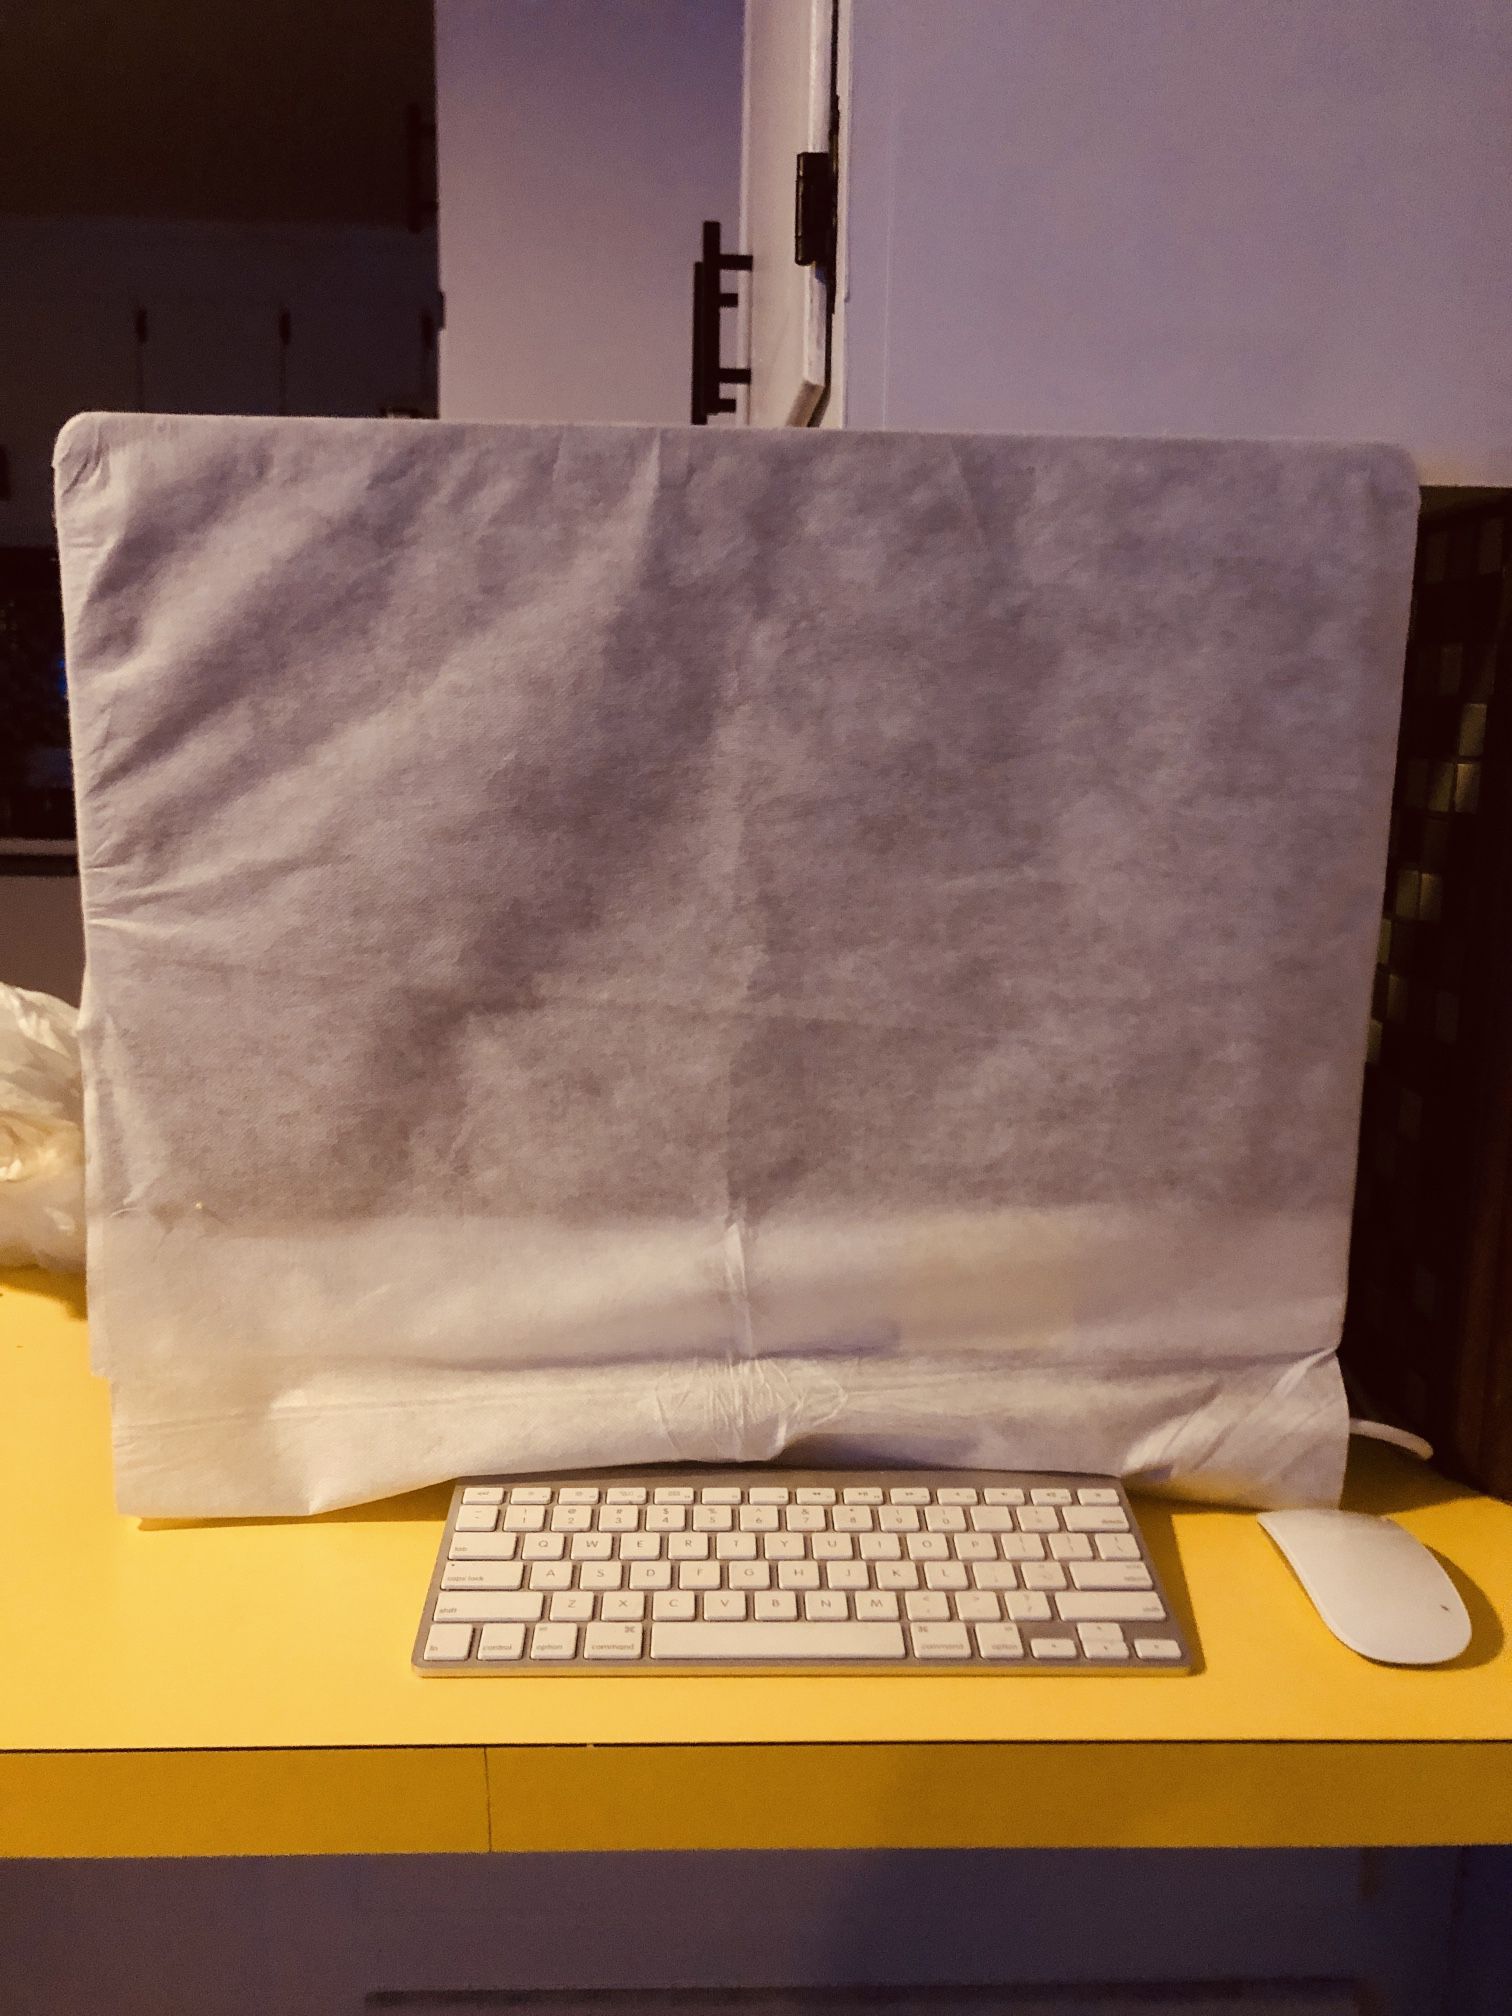 iMac 21.5 desk top computer